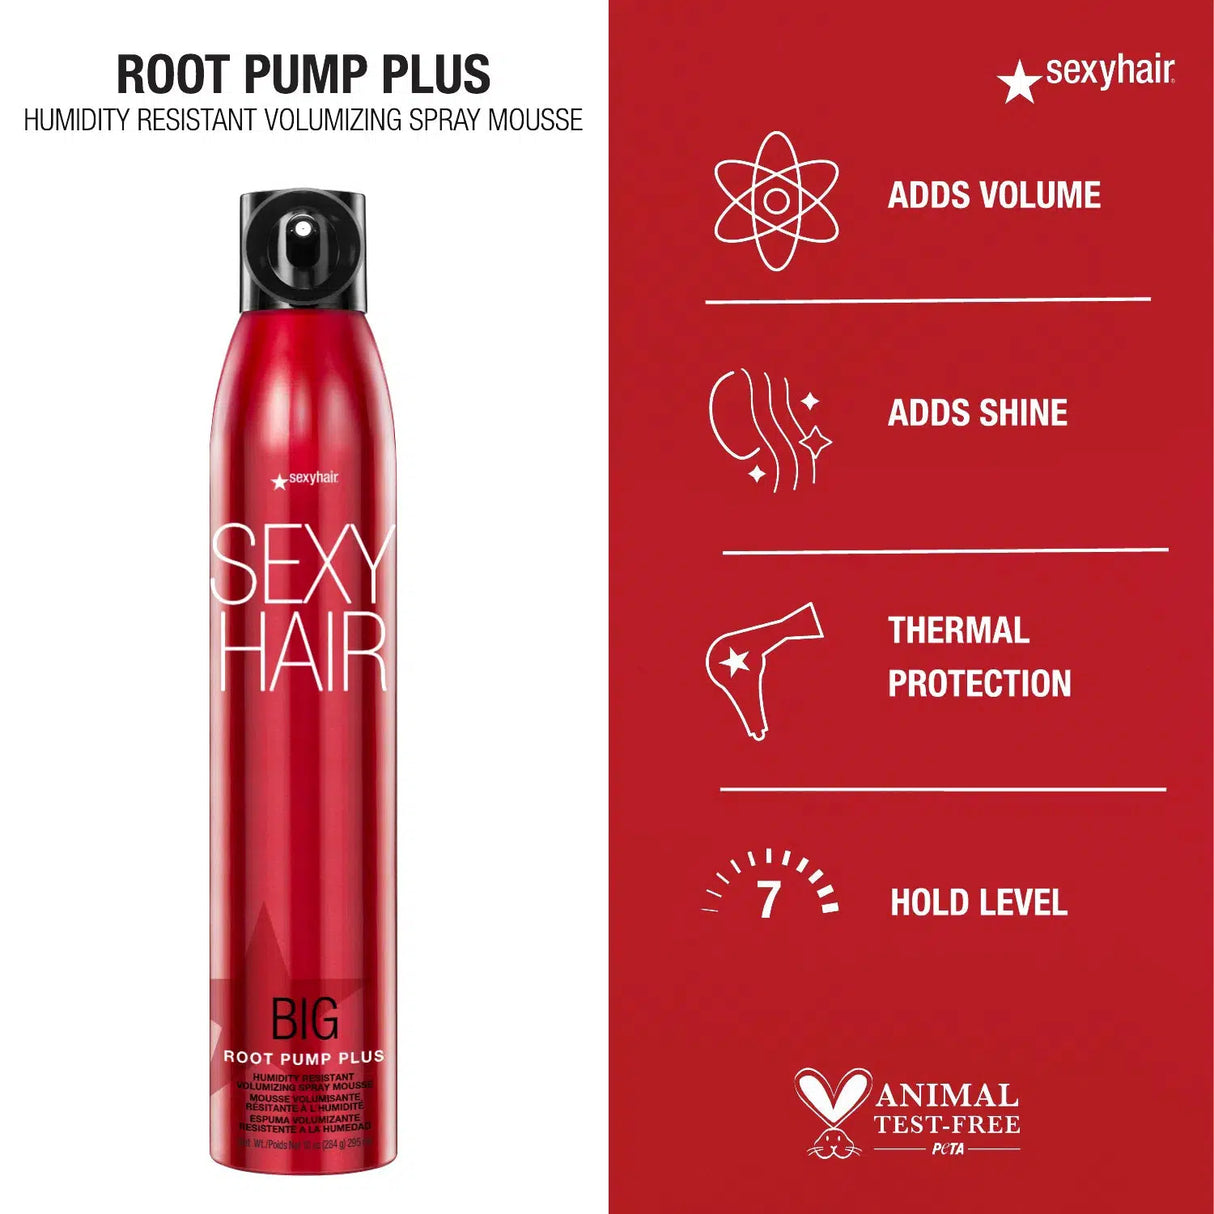 Root Pump Plus Volumizing Spray Mousse